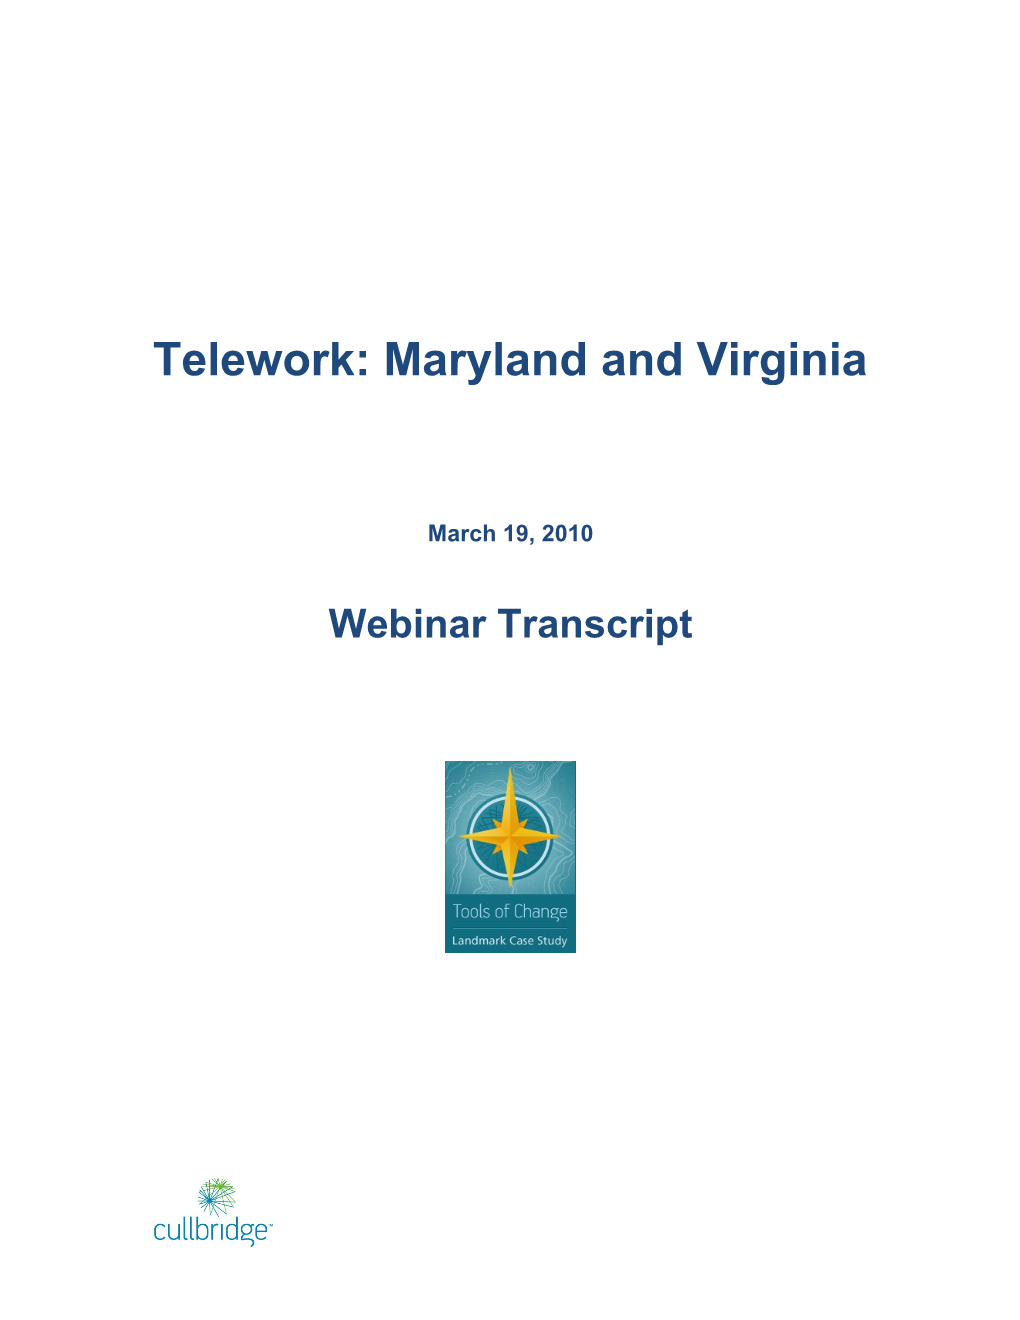 Webinar: Maryland and Virginia Telework Initiatives 1